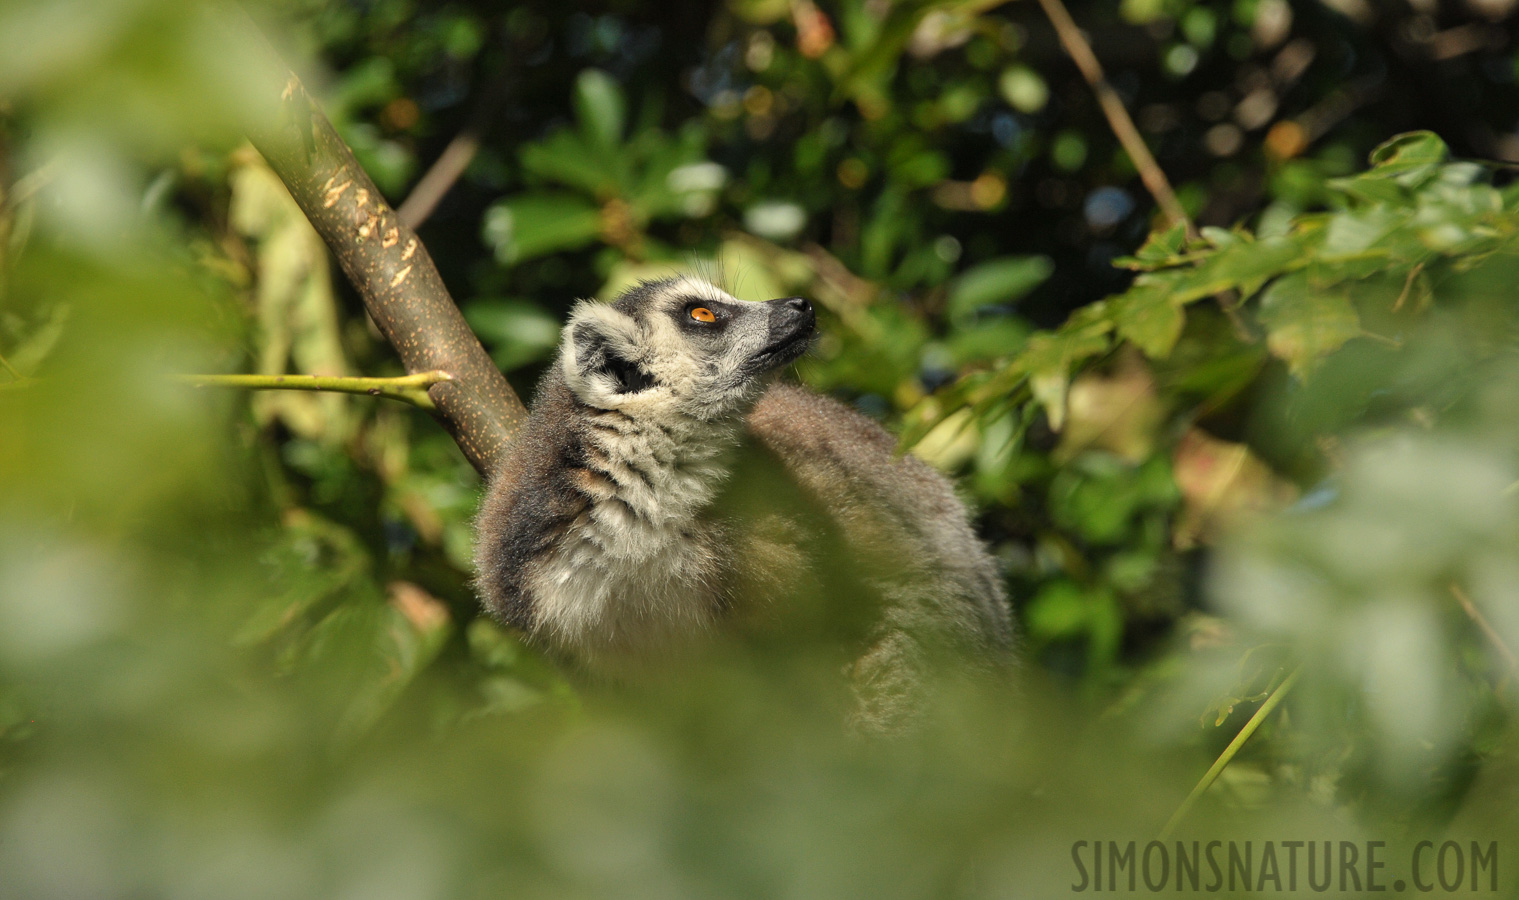 Lemur catta [300 mm, 1/2500 sec at f / 8.0, ISO 1600]